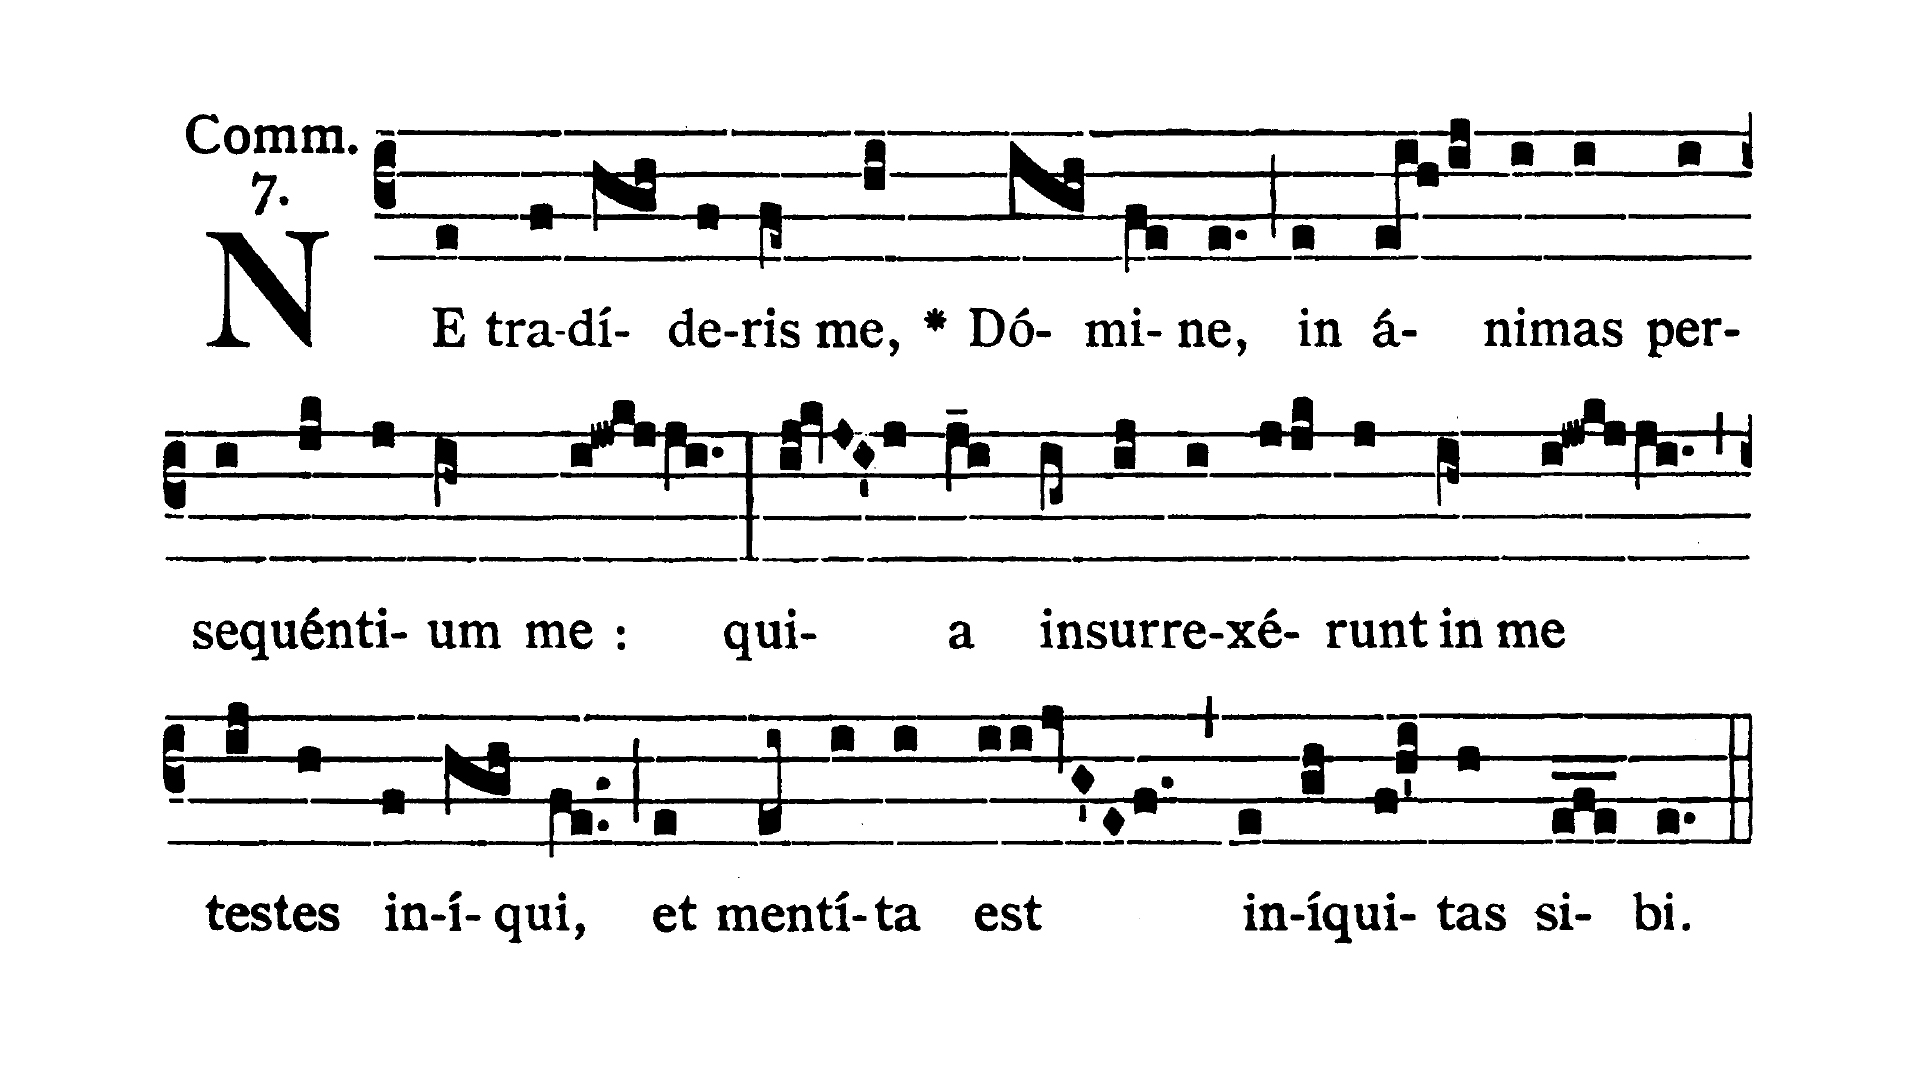 Sabbato post Dominicam I Passionis (Sobota po I Niedzieli Męki Pańskiej) - Communio (Ne tradideris me)